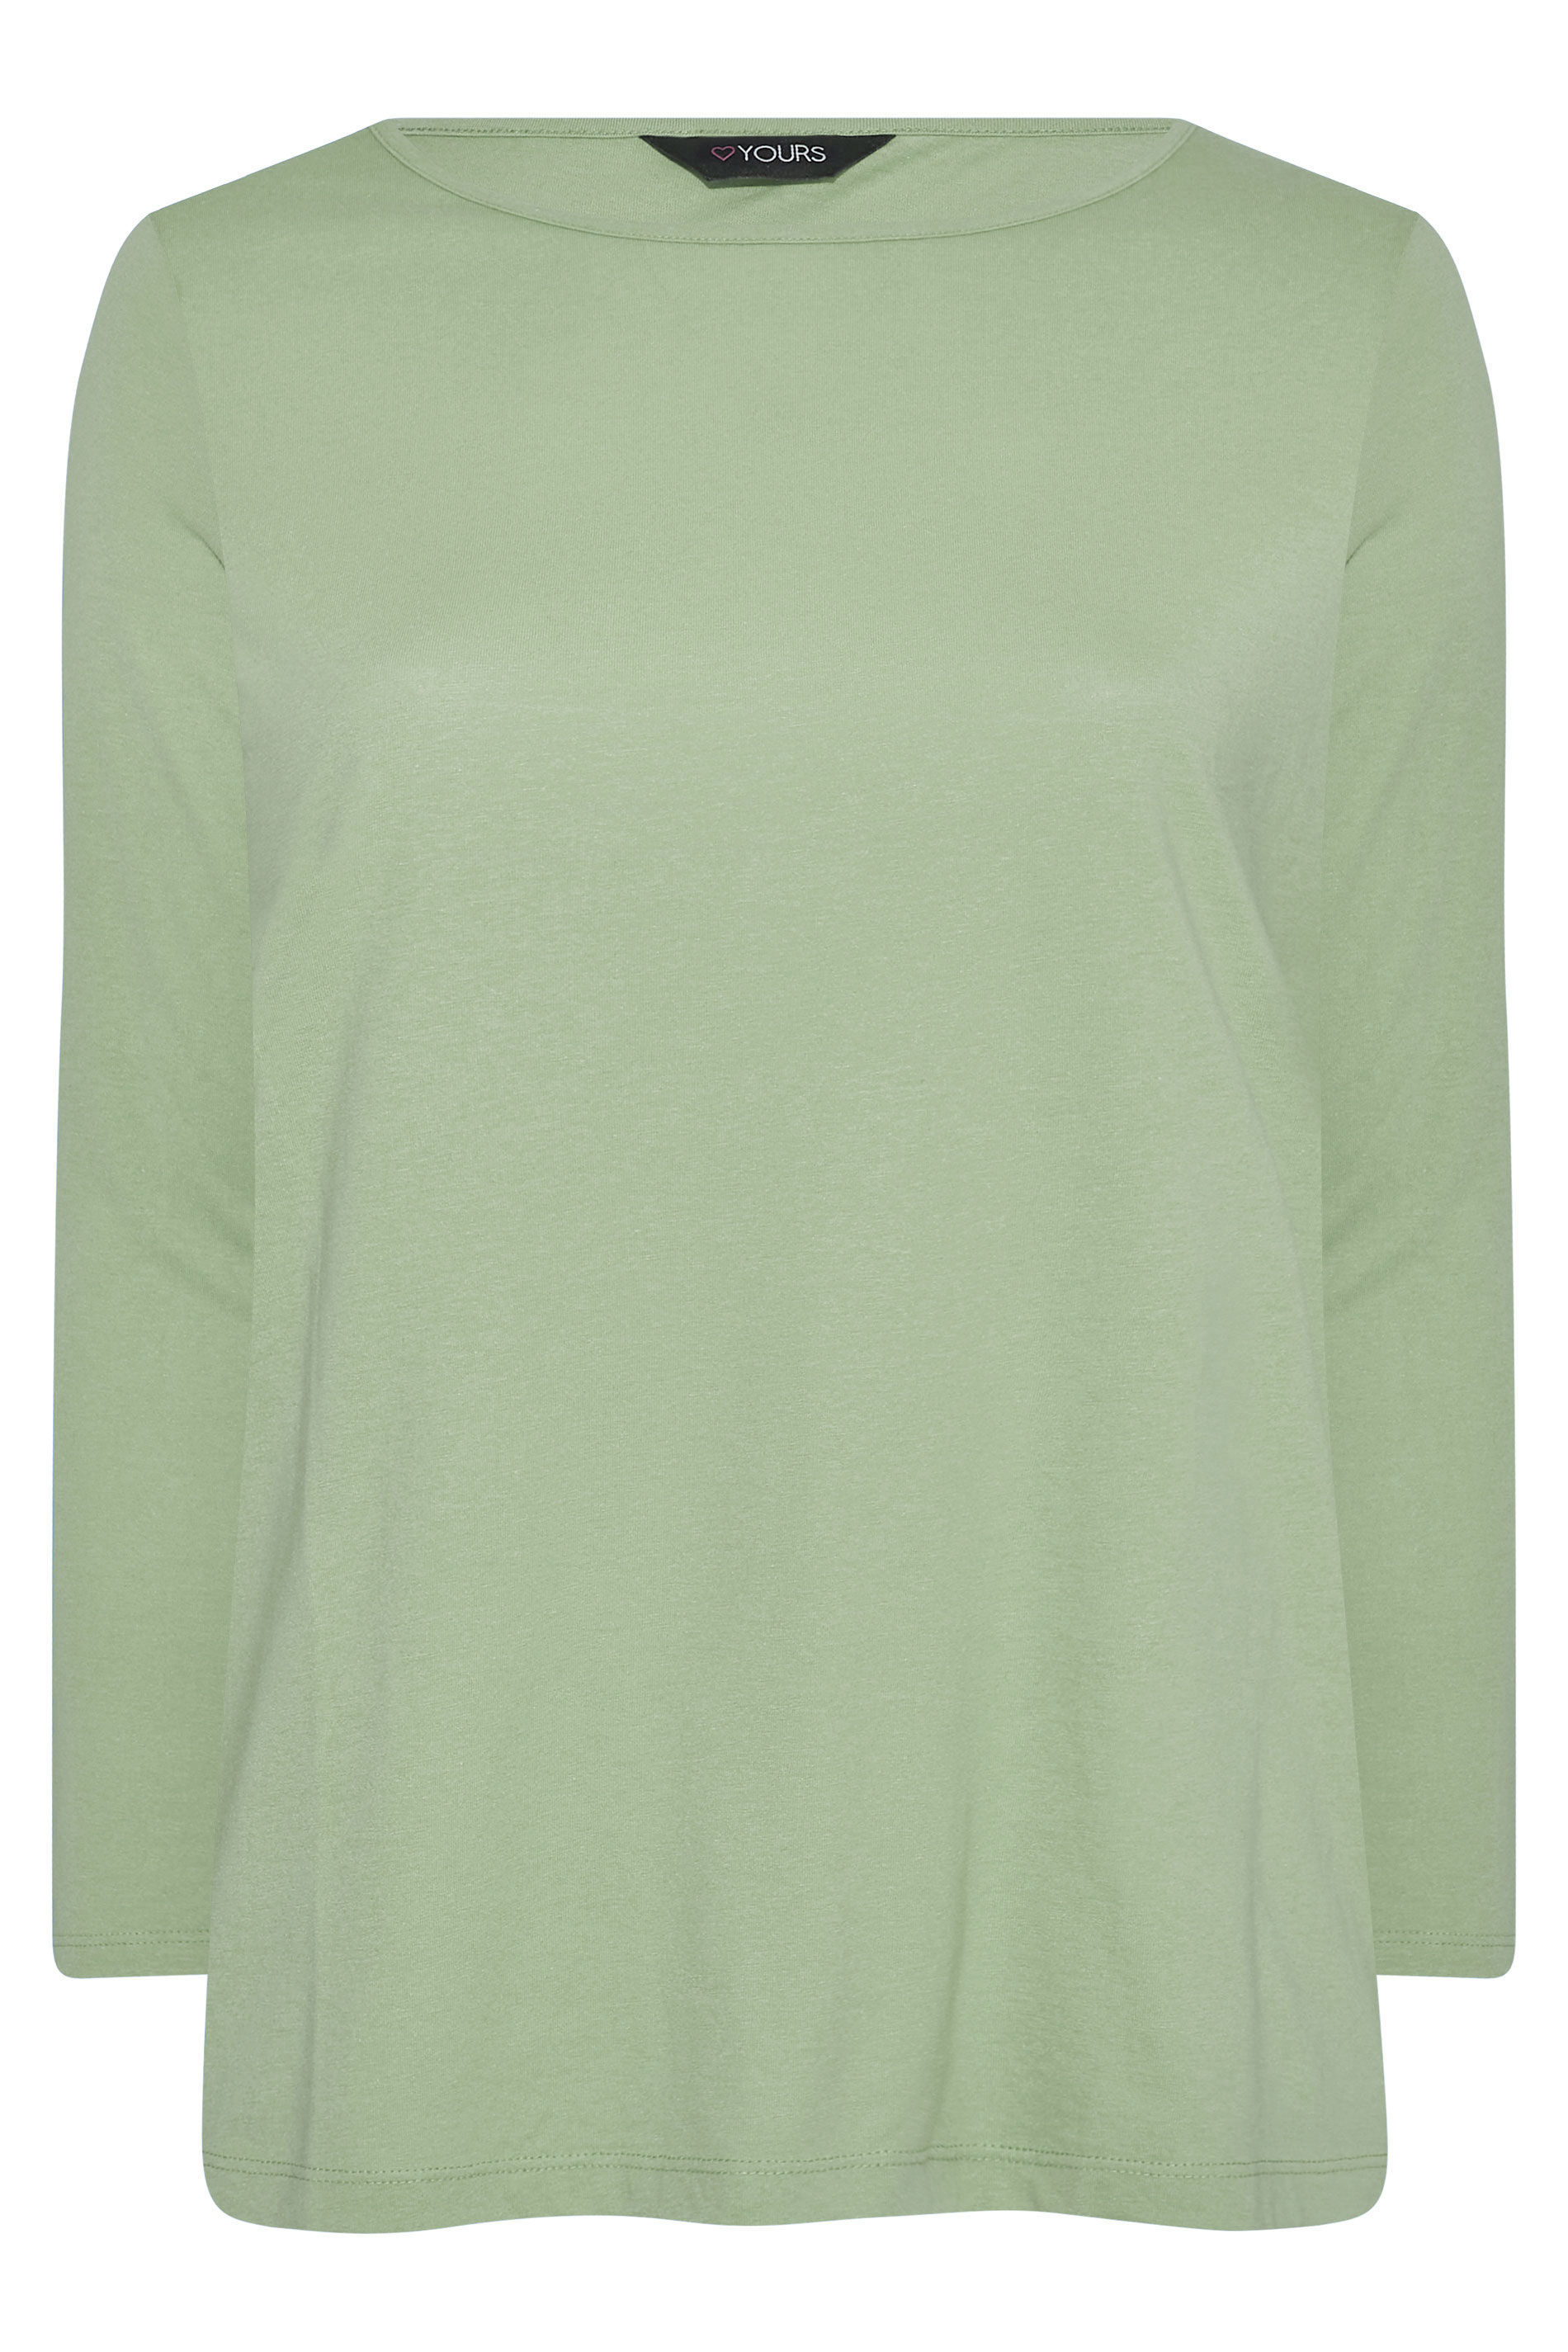 Grande taille  Tops Grande taille  T-Shirts | T-Shirt Vert Pastel Manches Longues en Jersey - CU39783